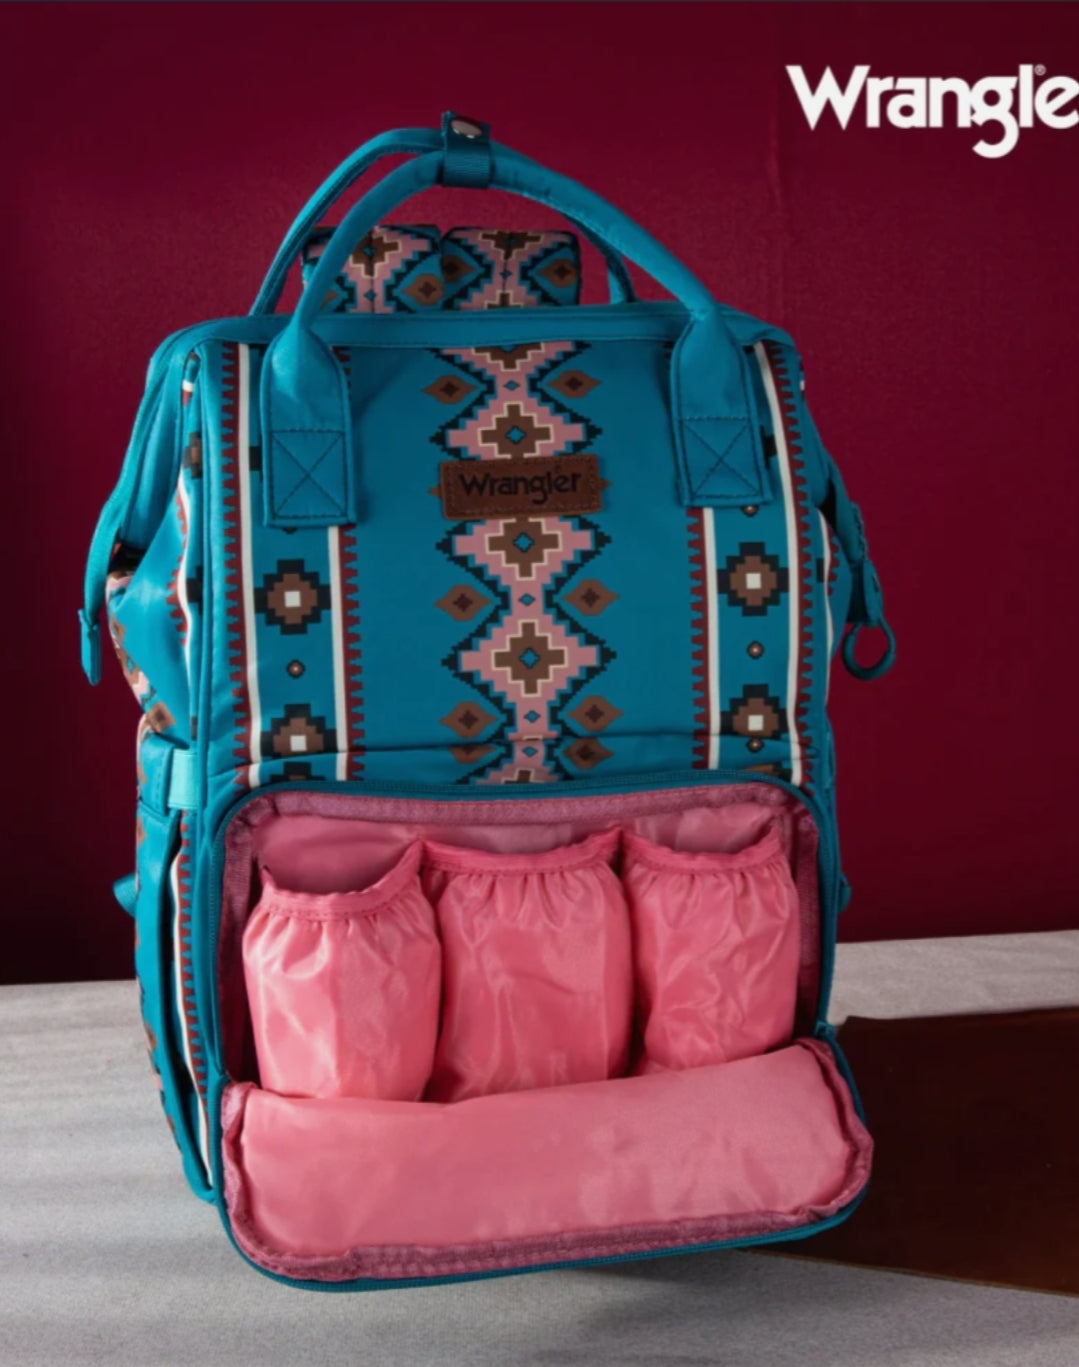 Wrangler Aztec Backpack - Turquoise